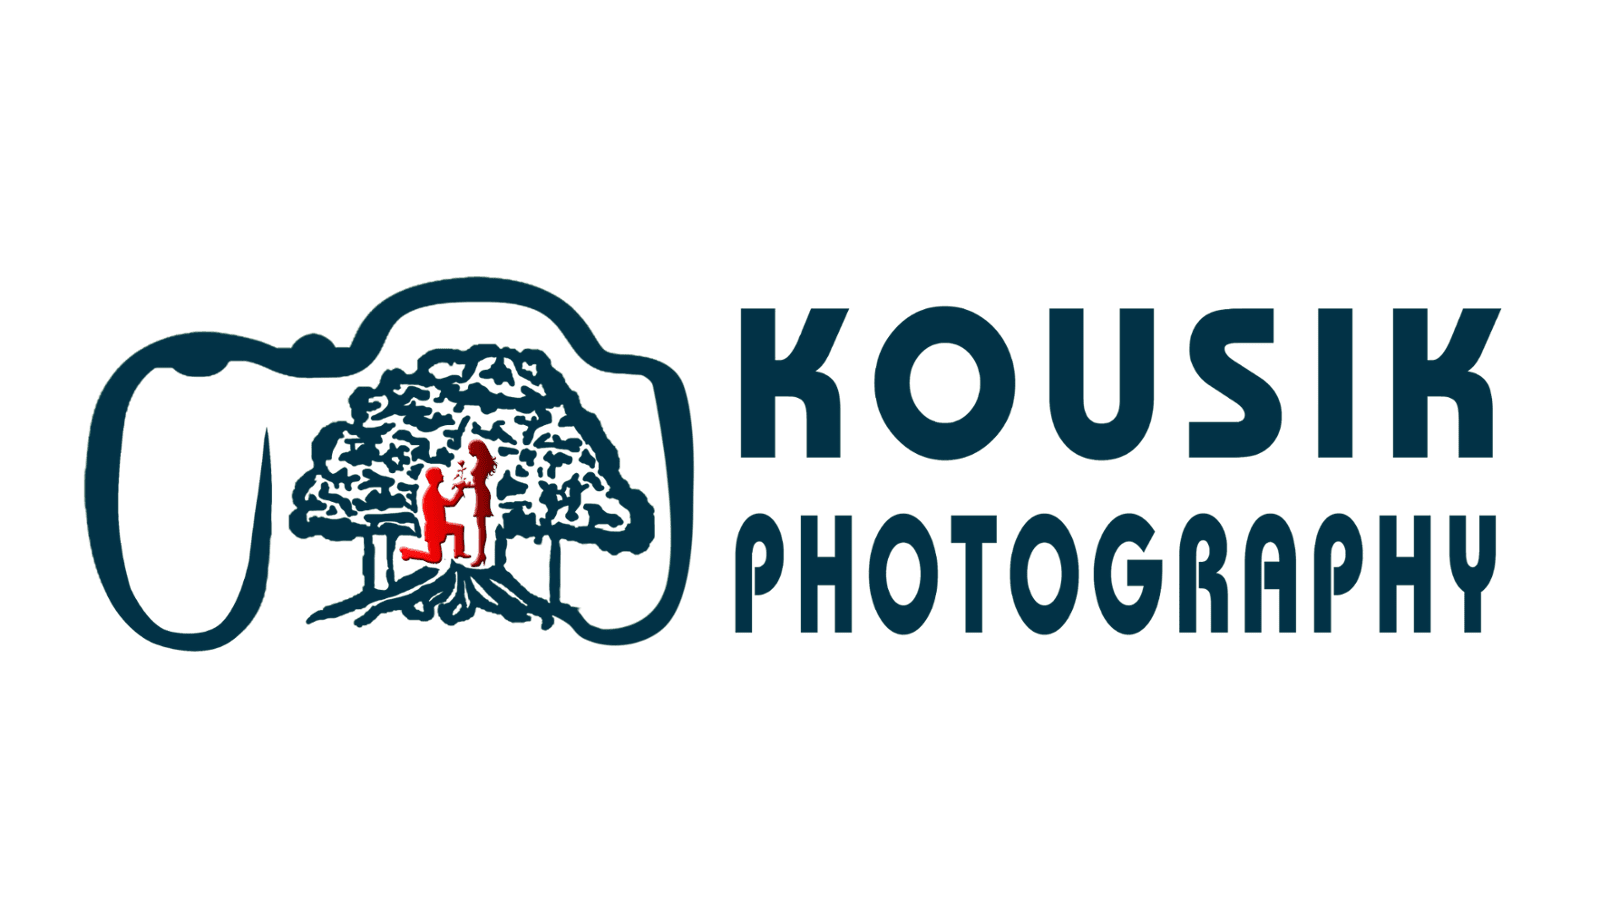 Kousik Photography|Photographer|Event Services